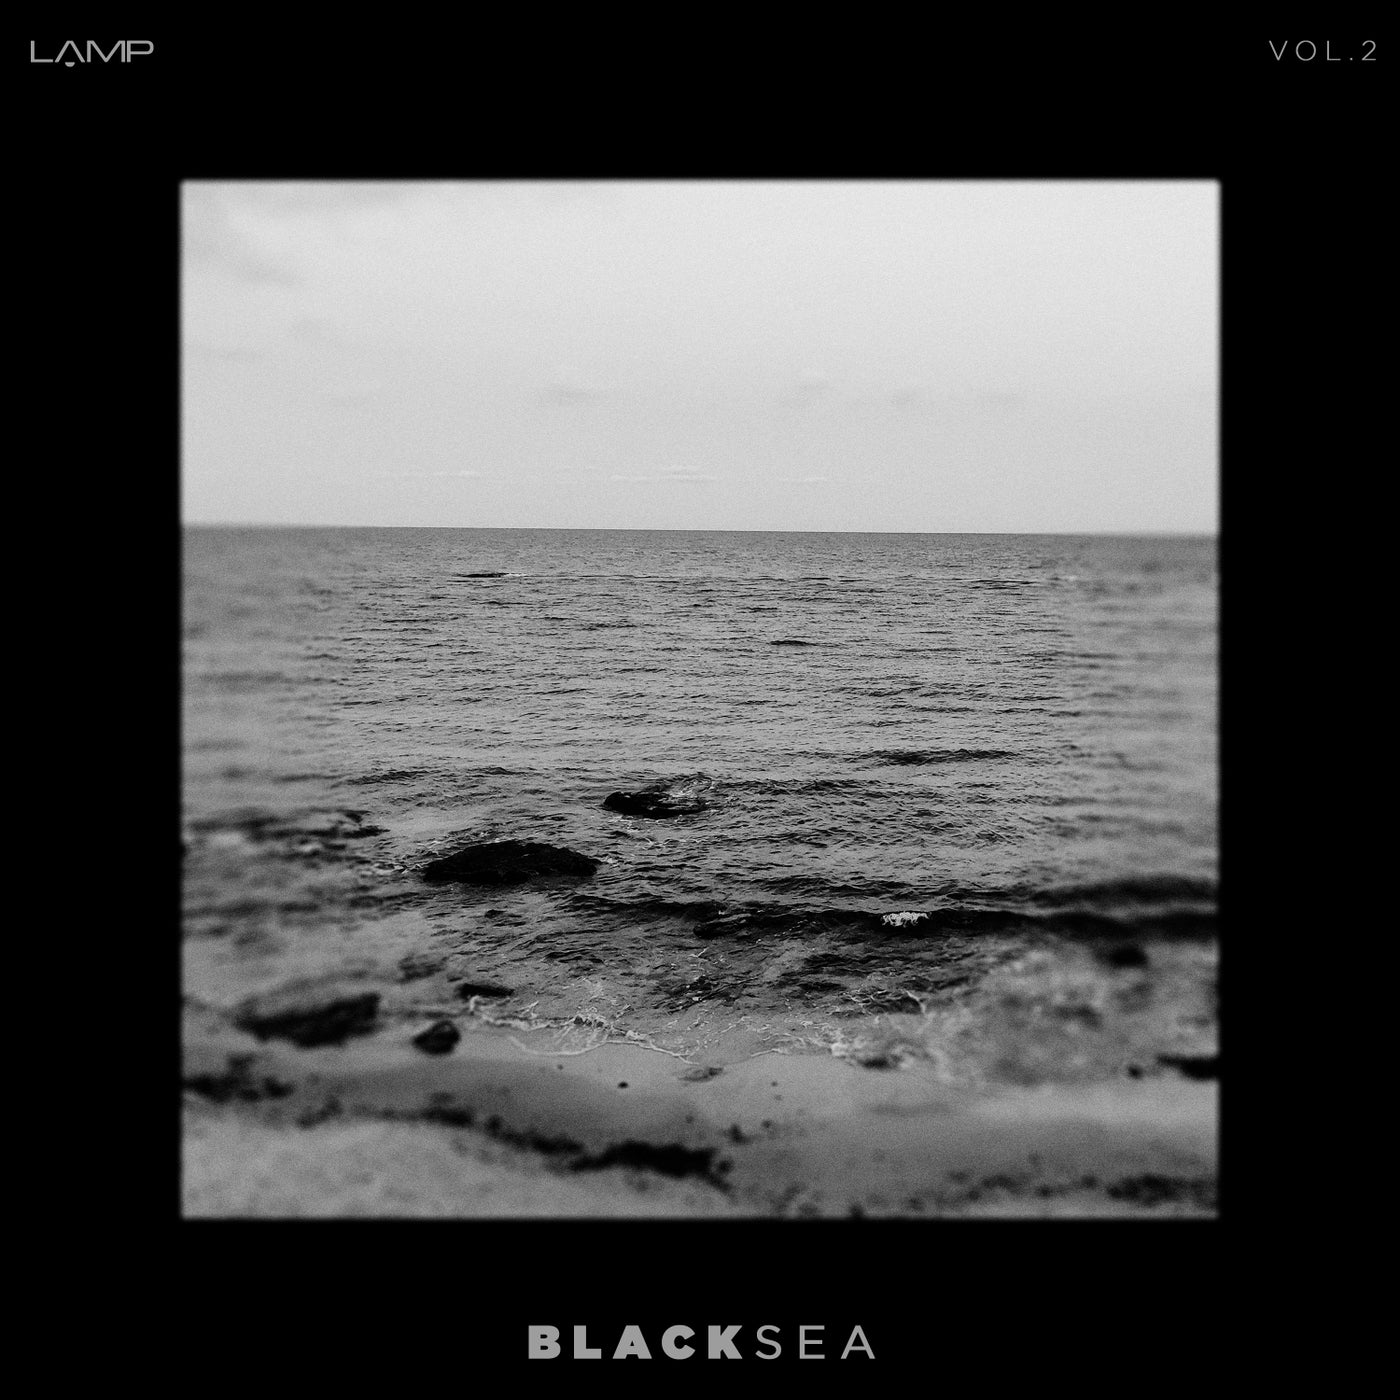 Black Sea, Vol. 2